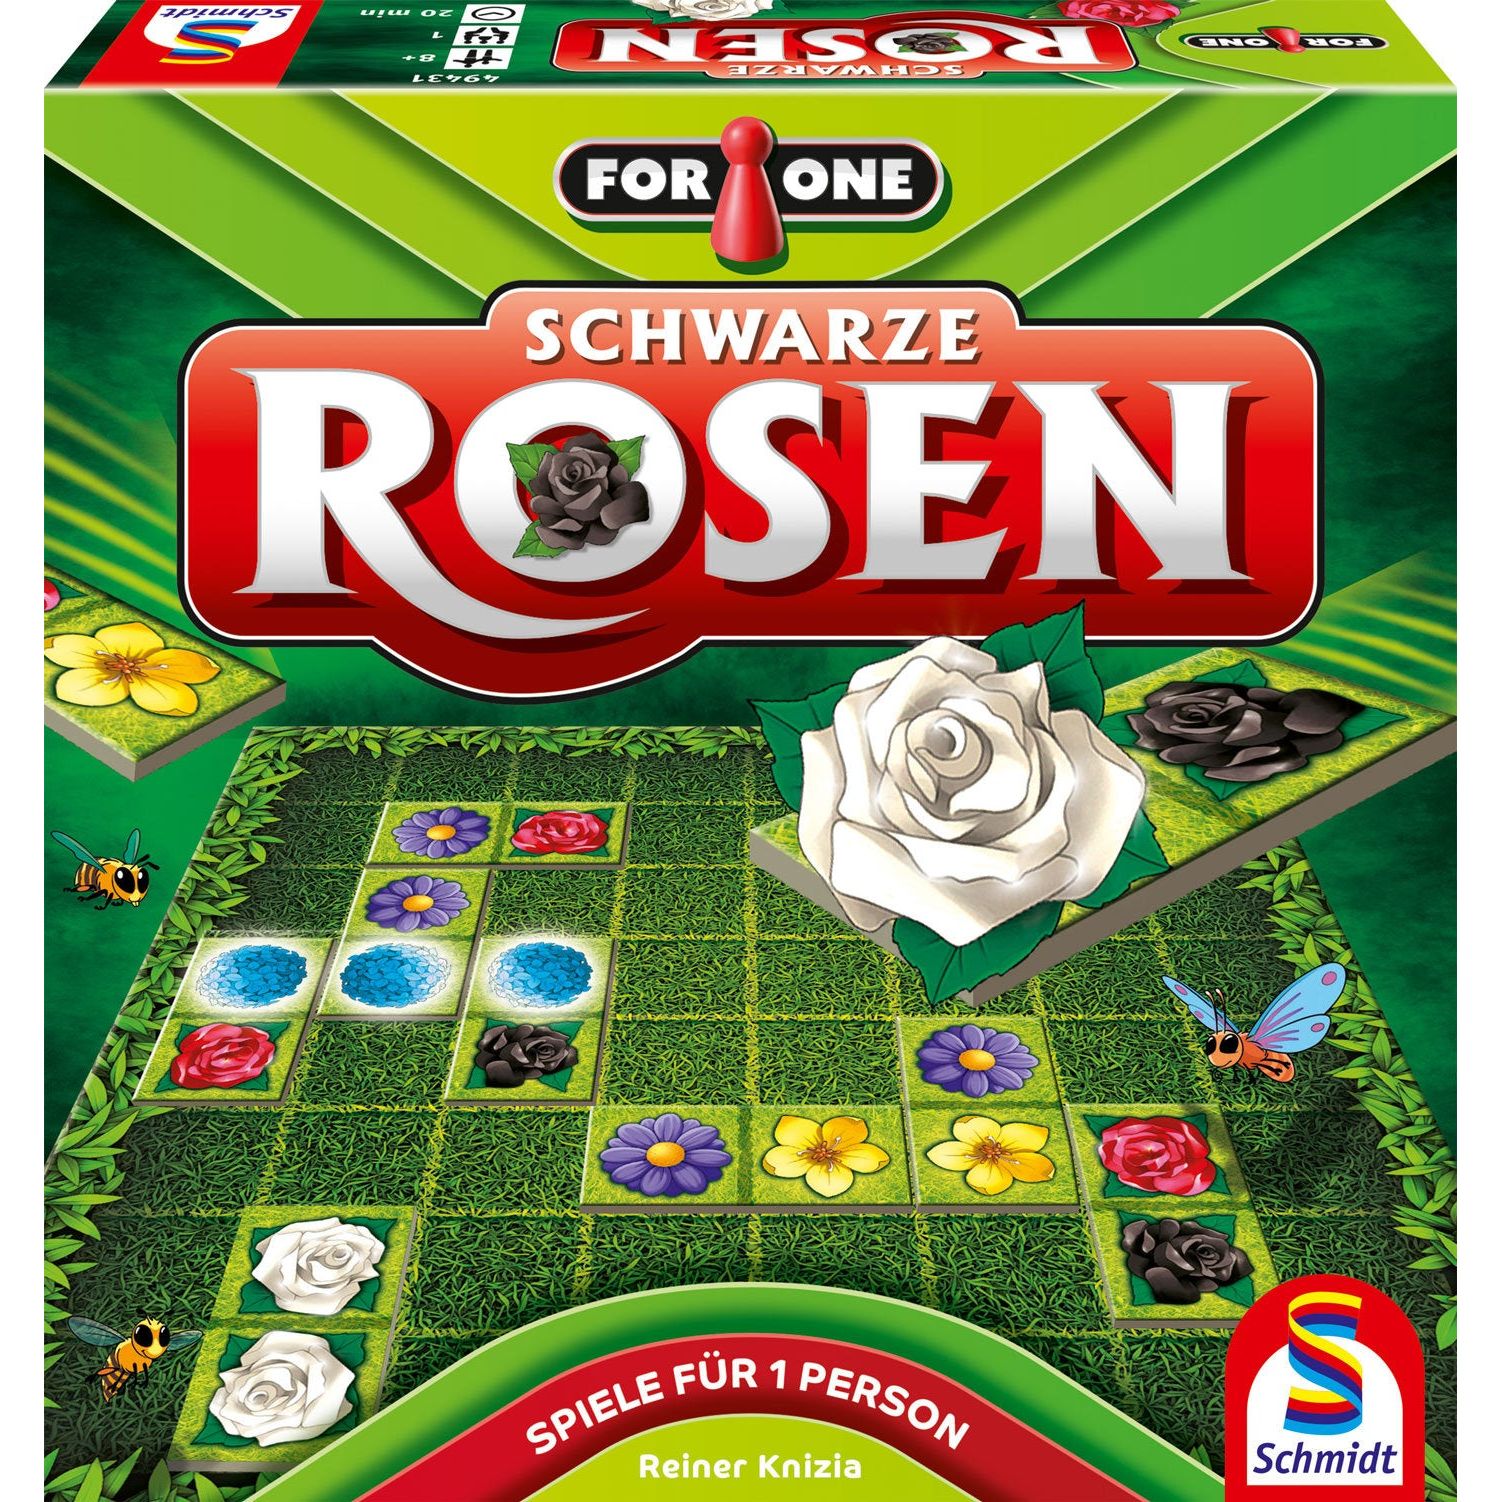 Schmidt Spiele | For One, Schwarze Rosen